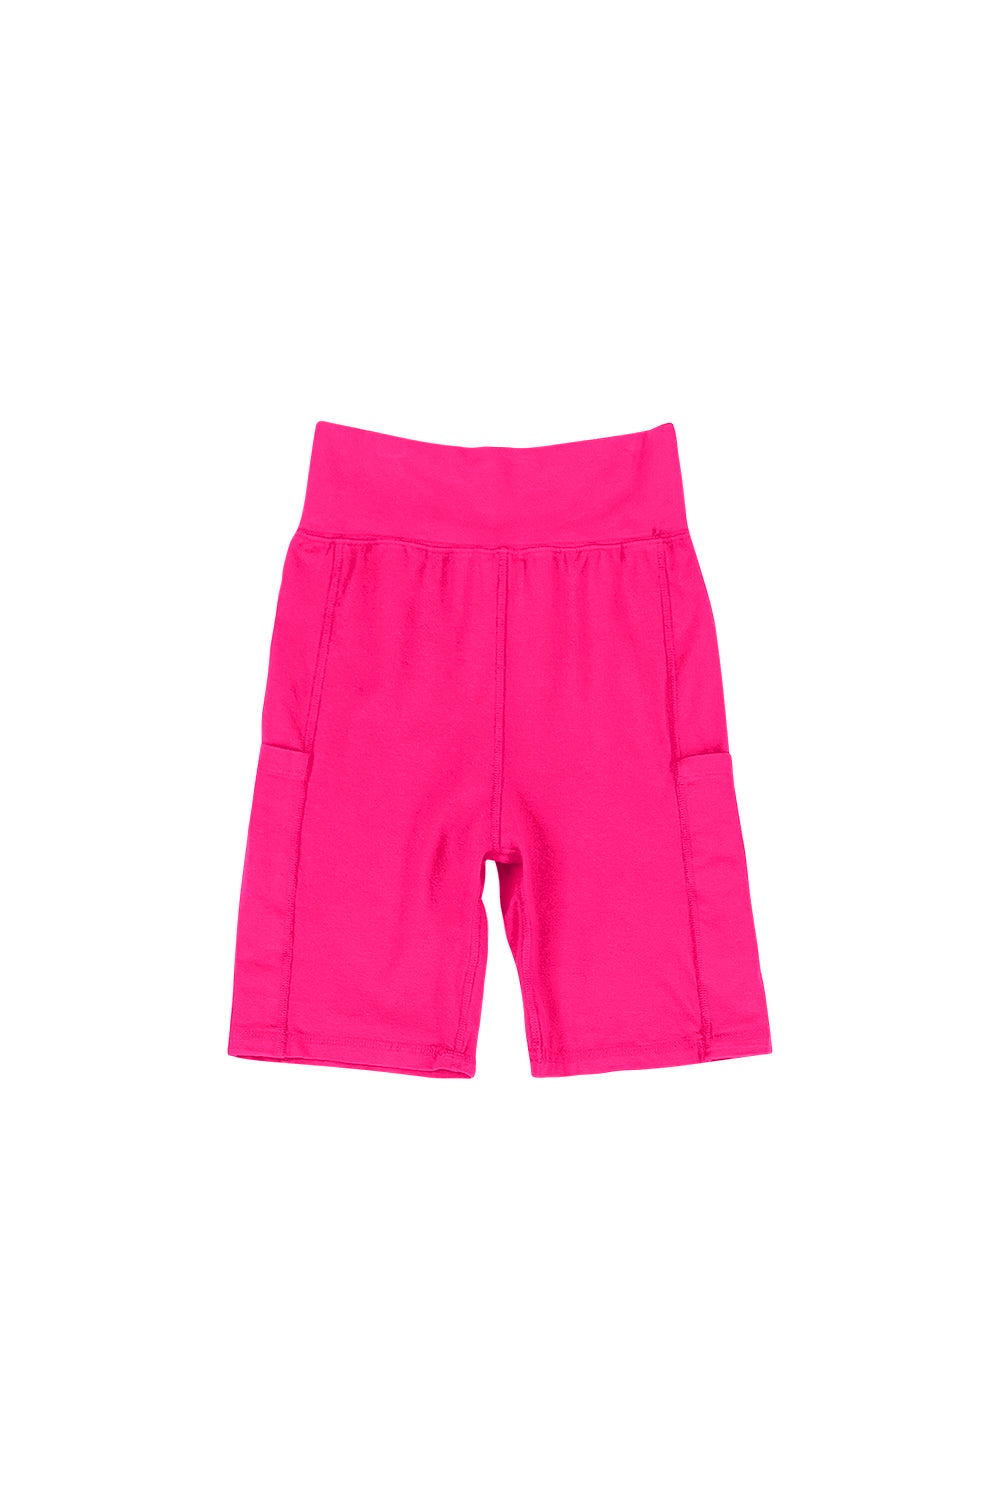 Bike Short with Pockets | Jungmaven Hemp Clothing & Accessories / Color: Pink Grapefruit